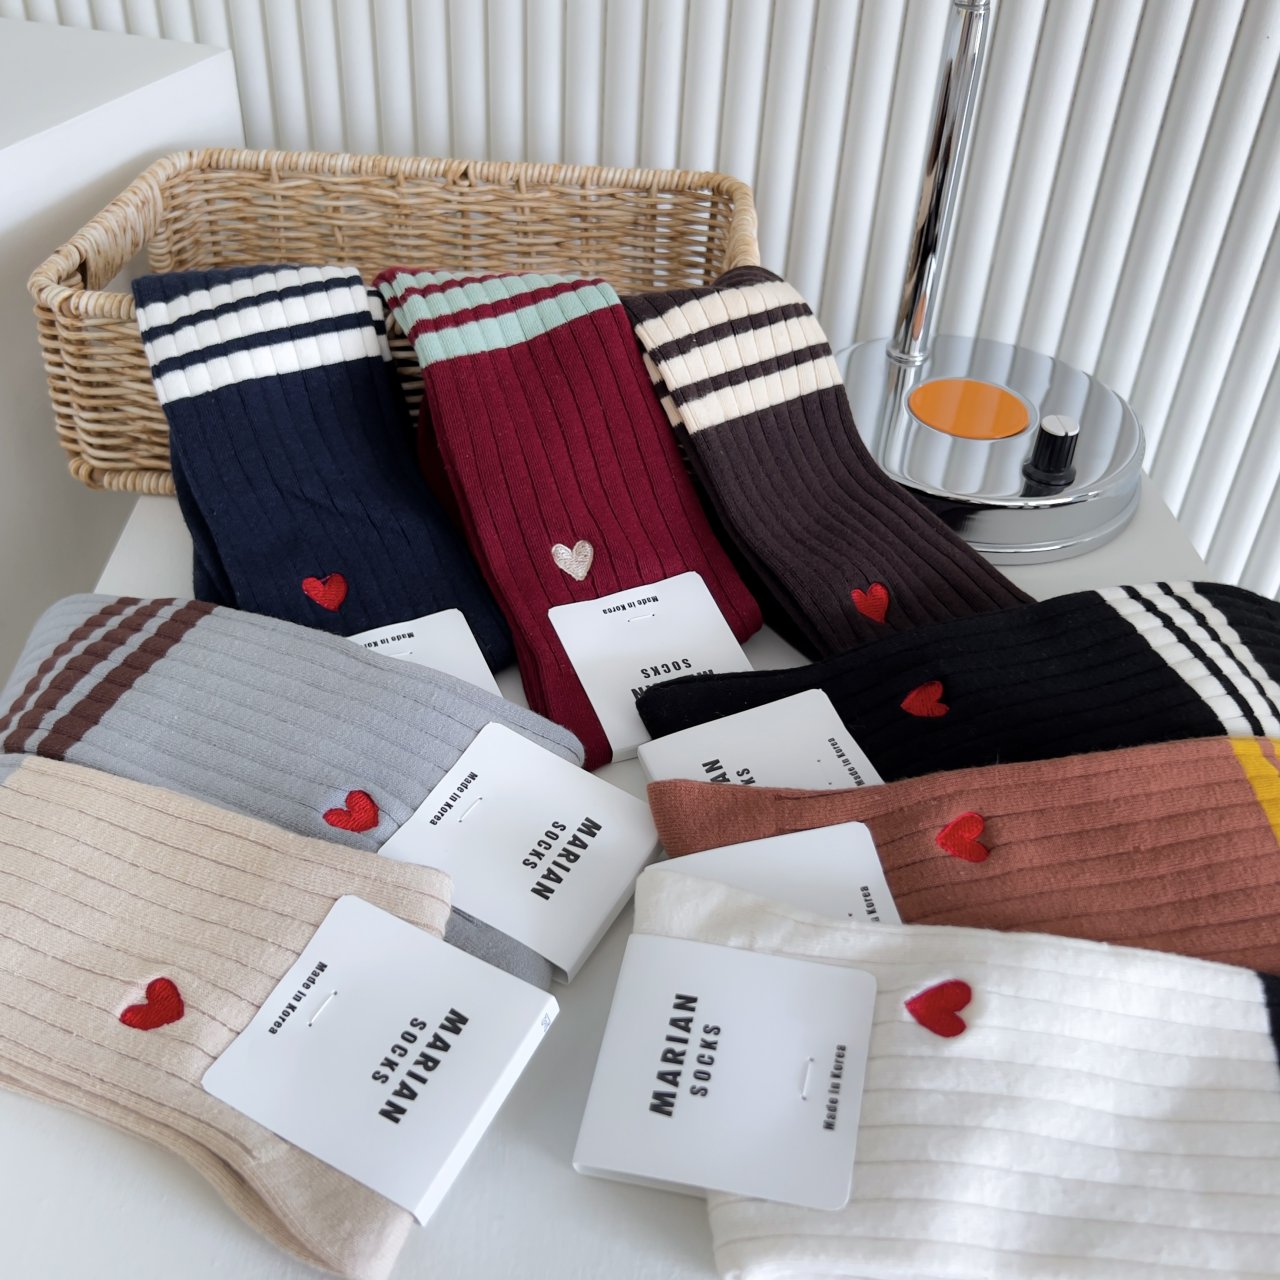 Heart Daily Cotton Middle Socks- Leggings Socks, 2 Line workout Socks, Premium Quality Cotton Soft Socks - MidCalf Socks , sports Crew Socks